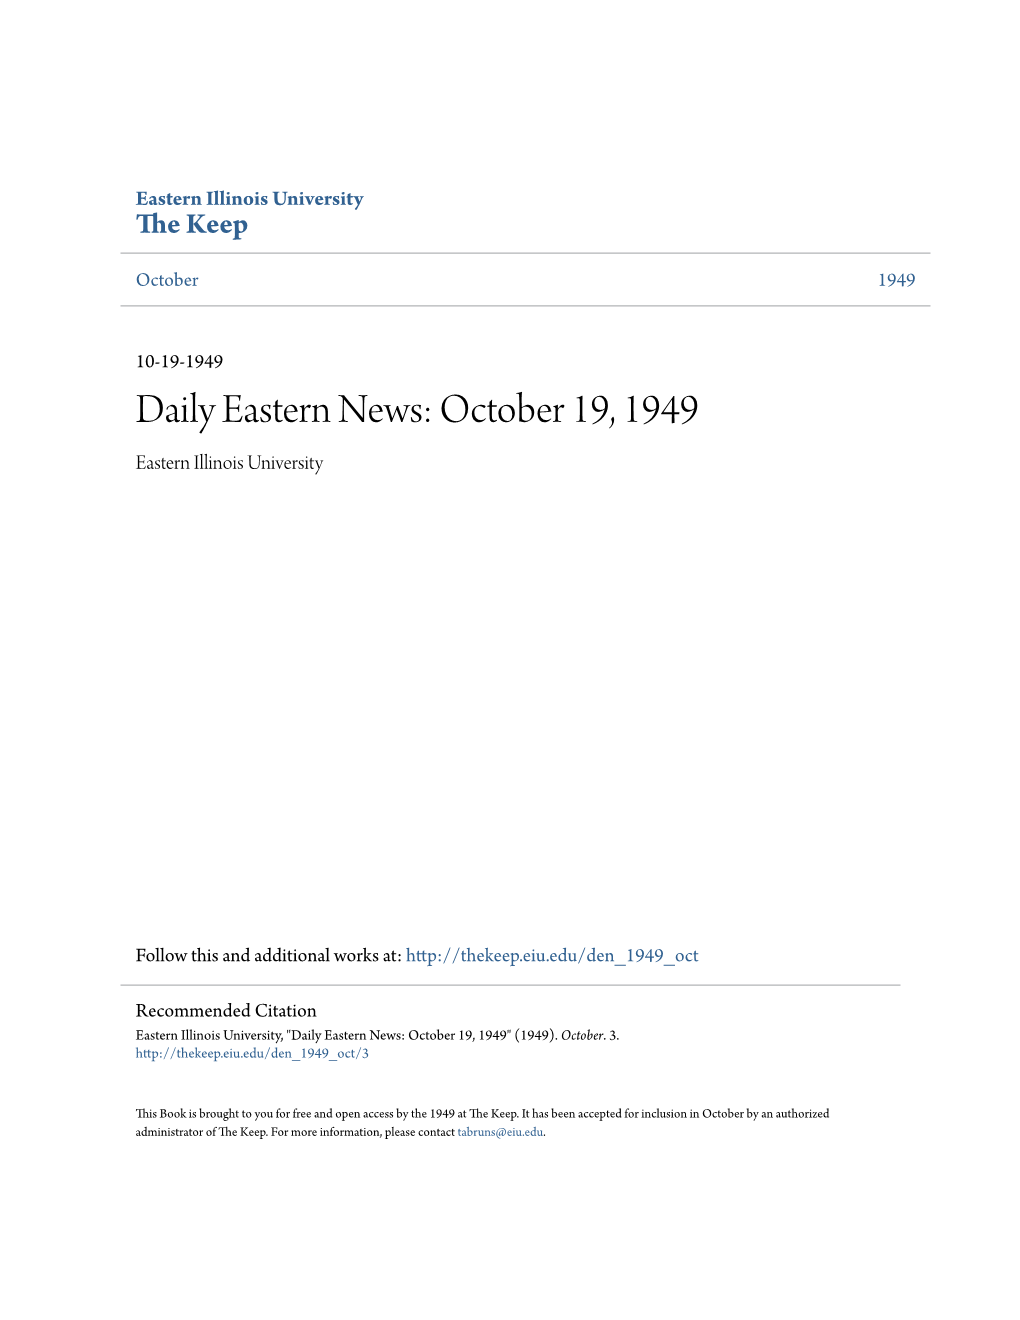 Daily Eastern News: October 19, 1949 Eastern Illinois University